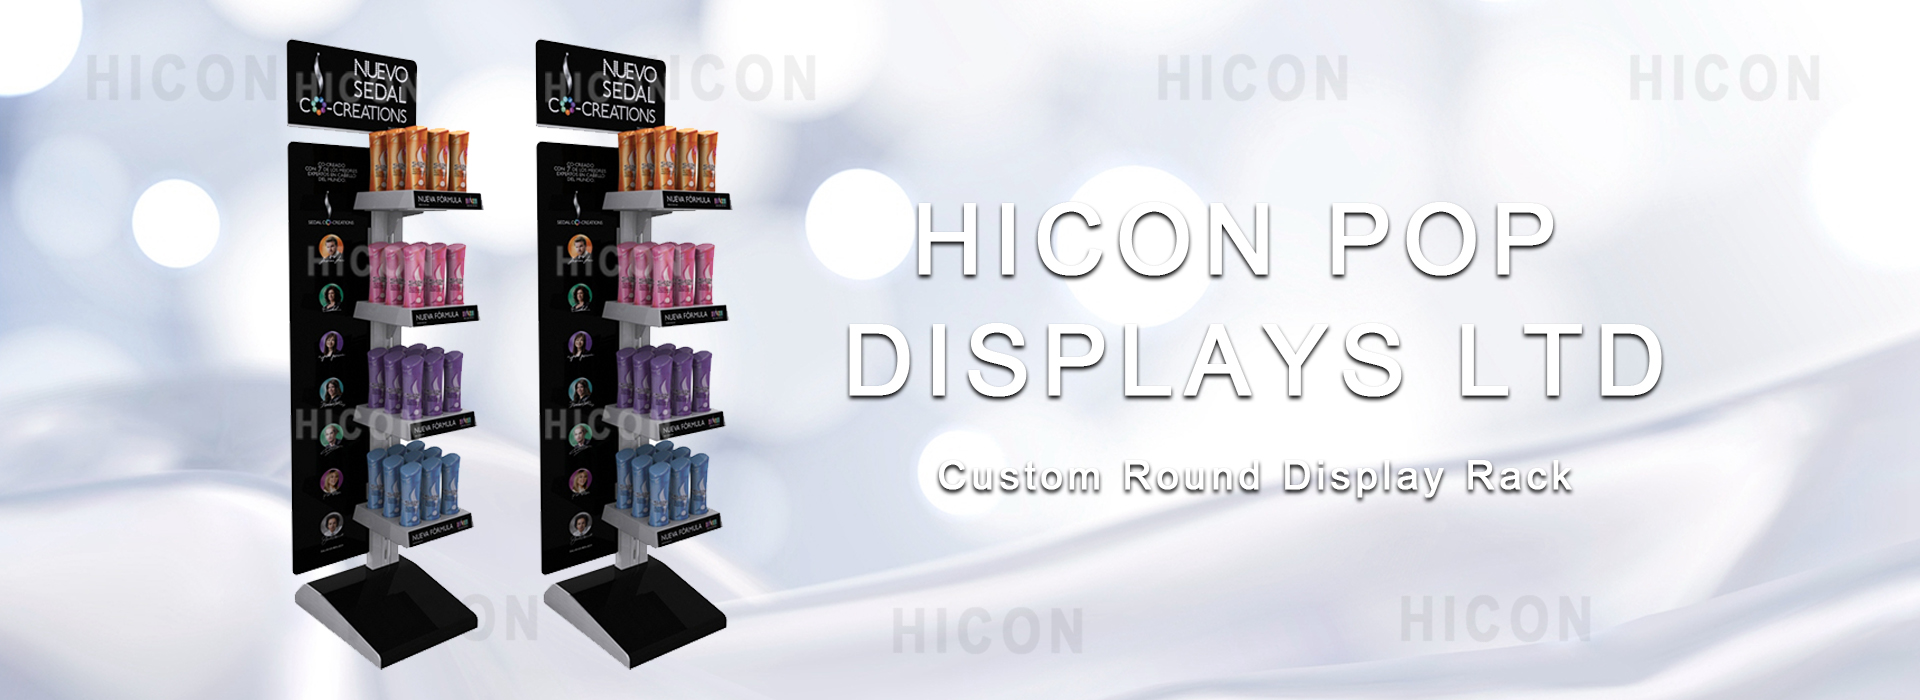 Custom Design China Made Cosmetics Display Solutions Countertop Displays Stands (3)